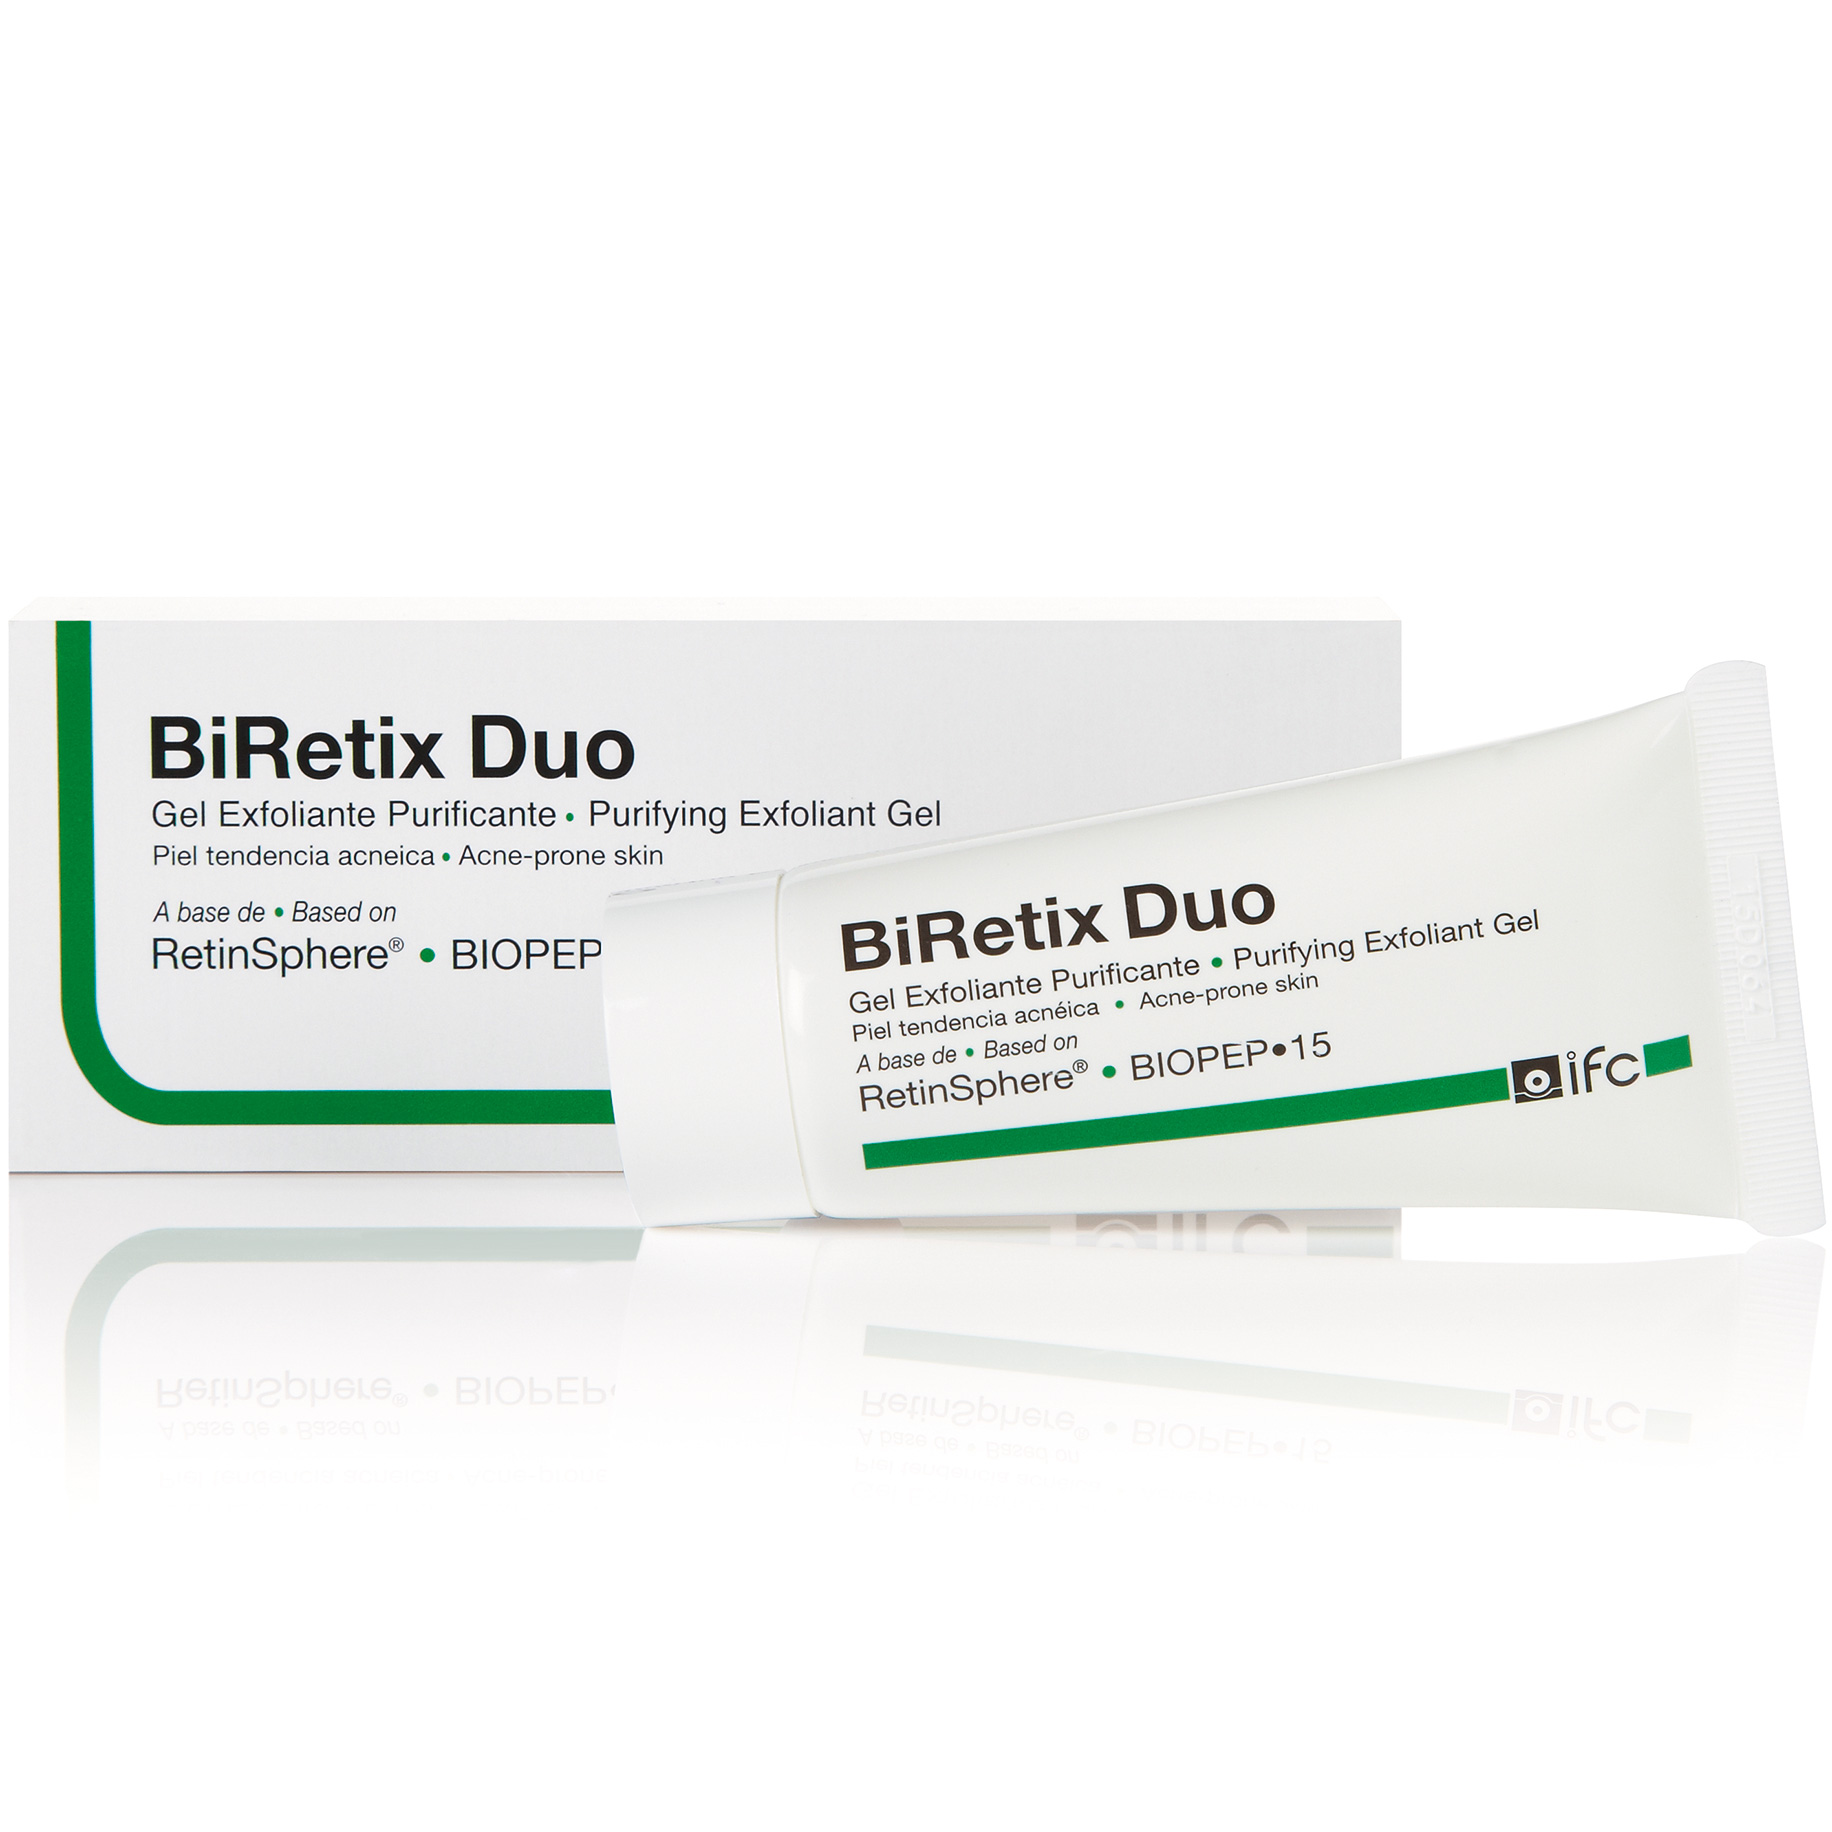 BIRETIX Duo. BIRETIX Duo Purifying Exfoliant Gel Anti-Blemish Gel Cantabria Labs себорегулирующий гель, 30 мл.. Муфлексин дуо гель. BIRETIX система.